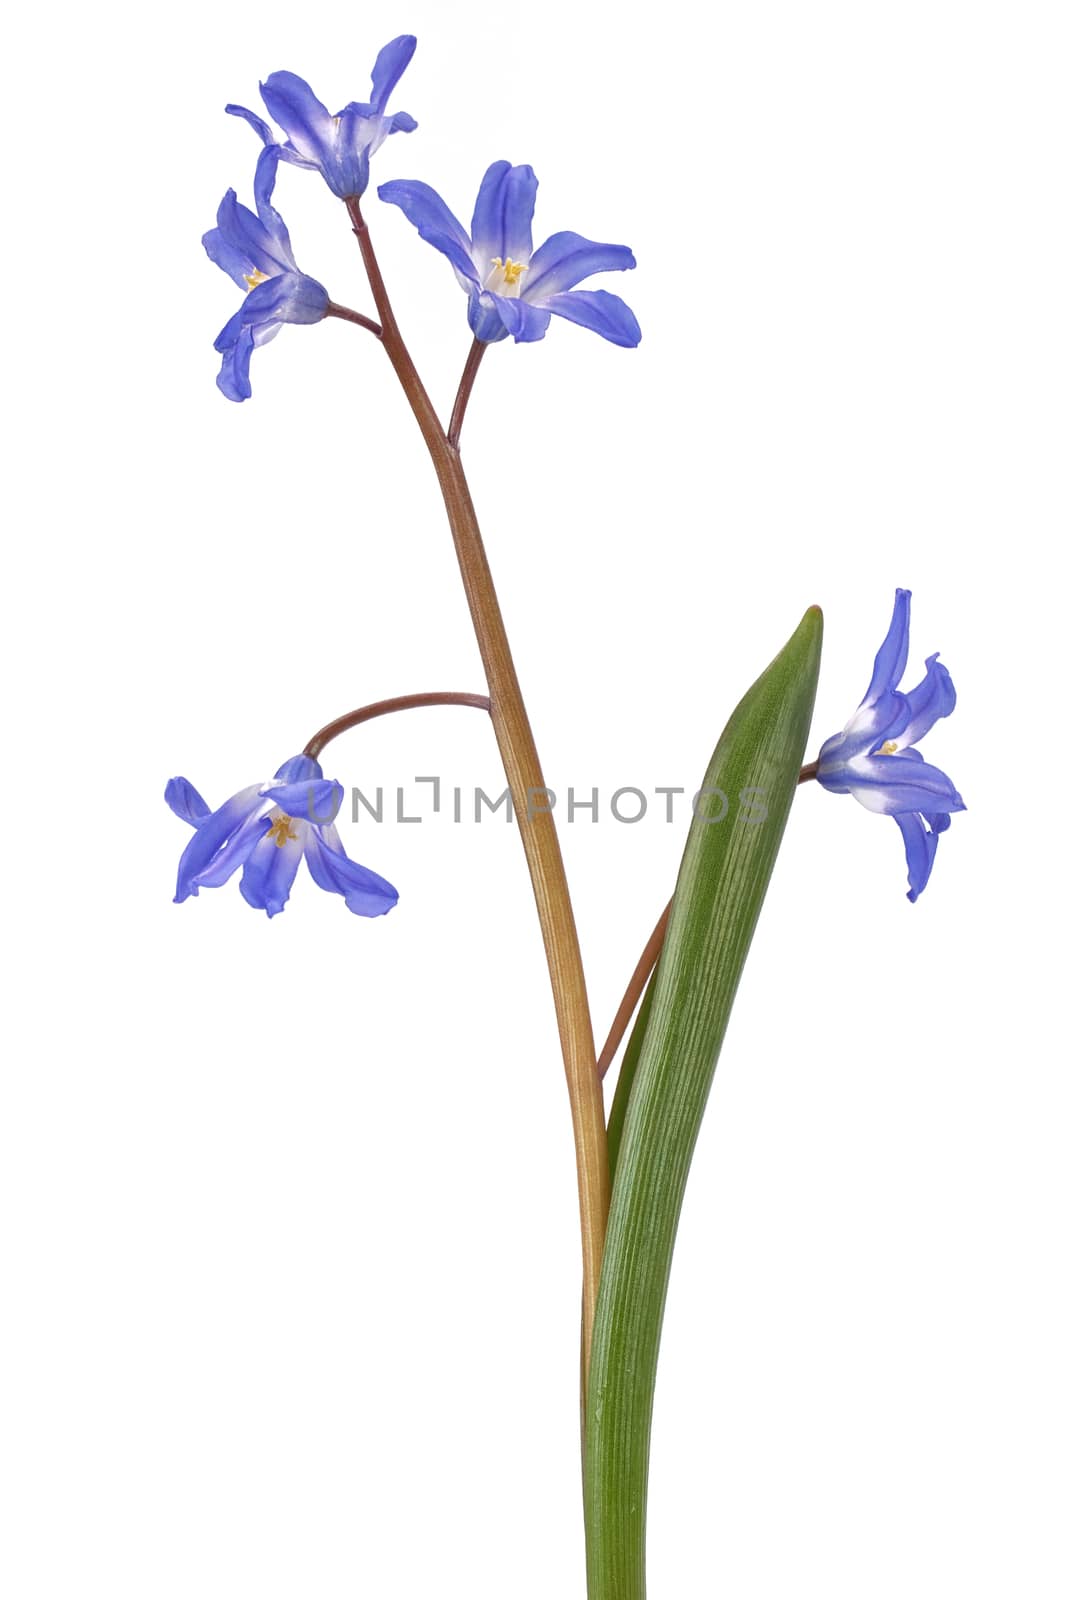 Blue flower on a white background by neryx